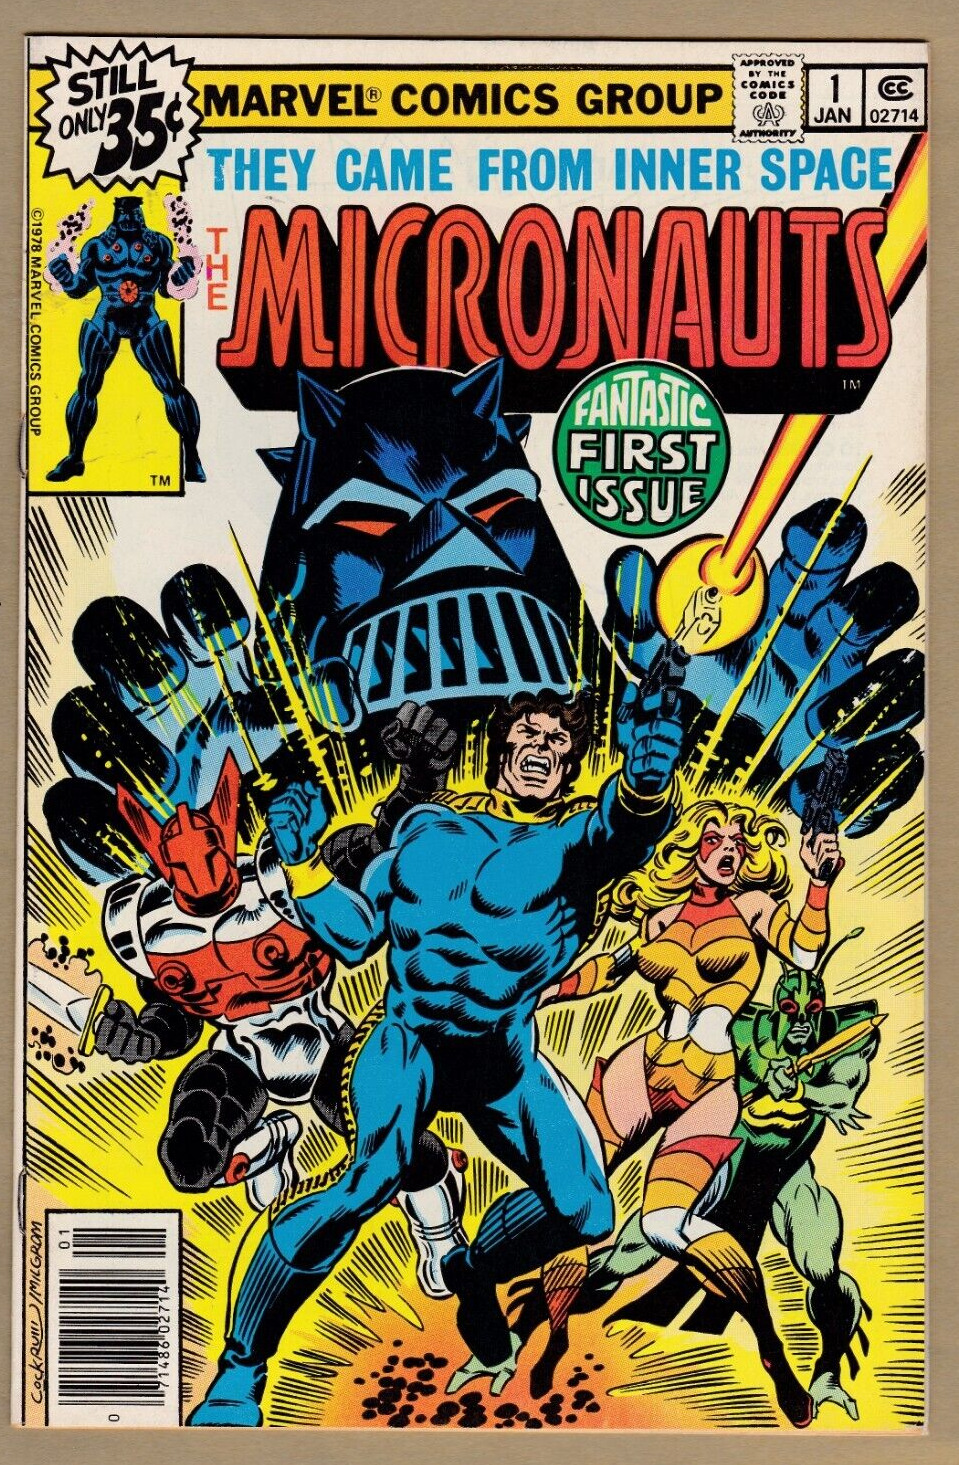 Micronauts #1 (Jan 1979) - 1st Baron Karza, Cockrum cover, Golden art